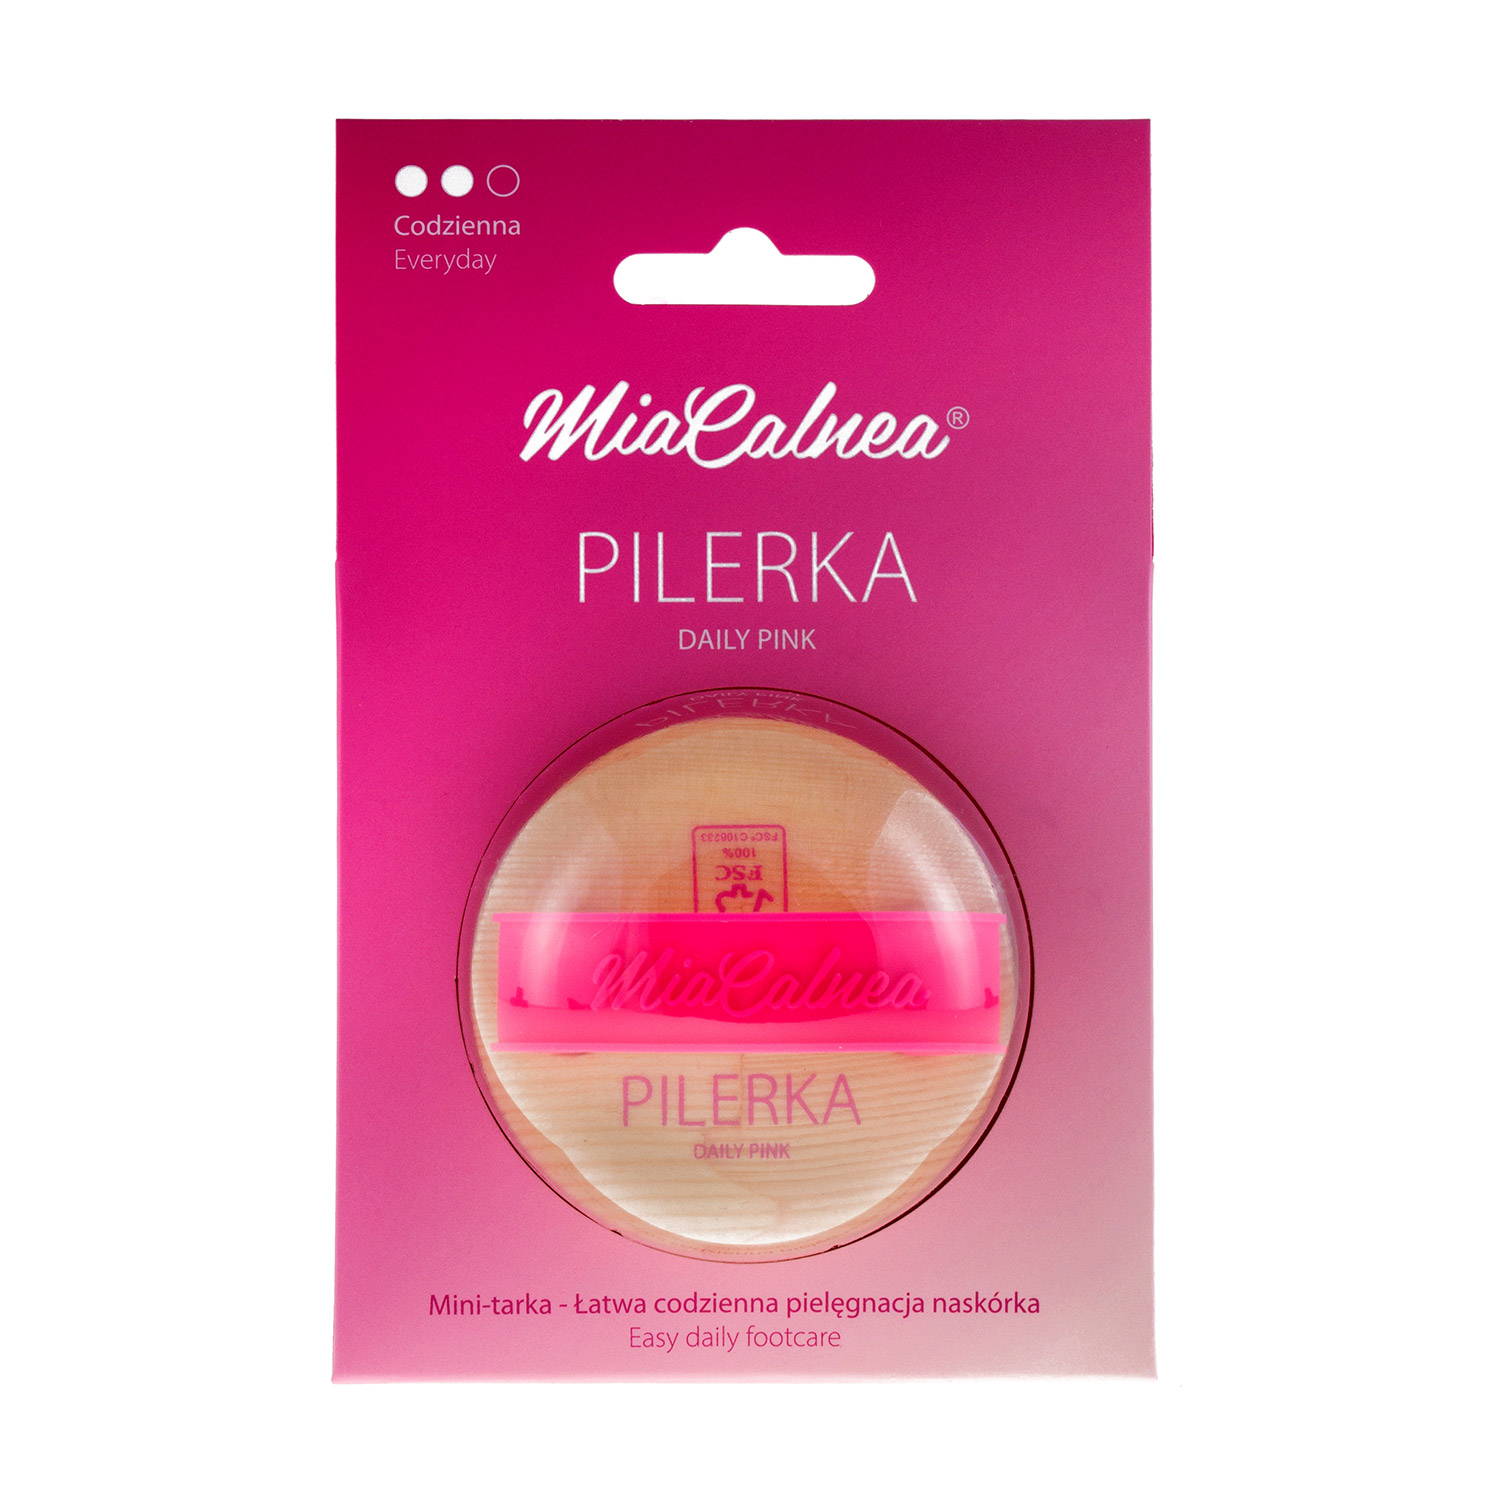 Mia Calnea pilerka waterproof mini-file for daily use grit 120 daily pink - 6009072 MIA CALNEA FOOT FILES